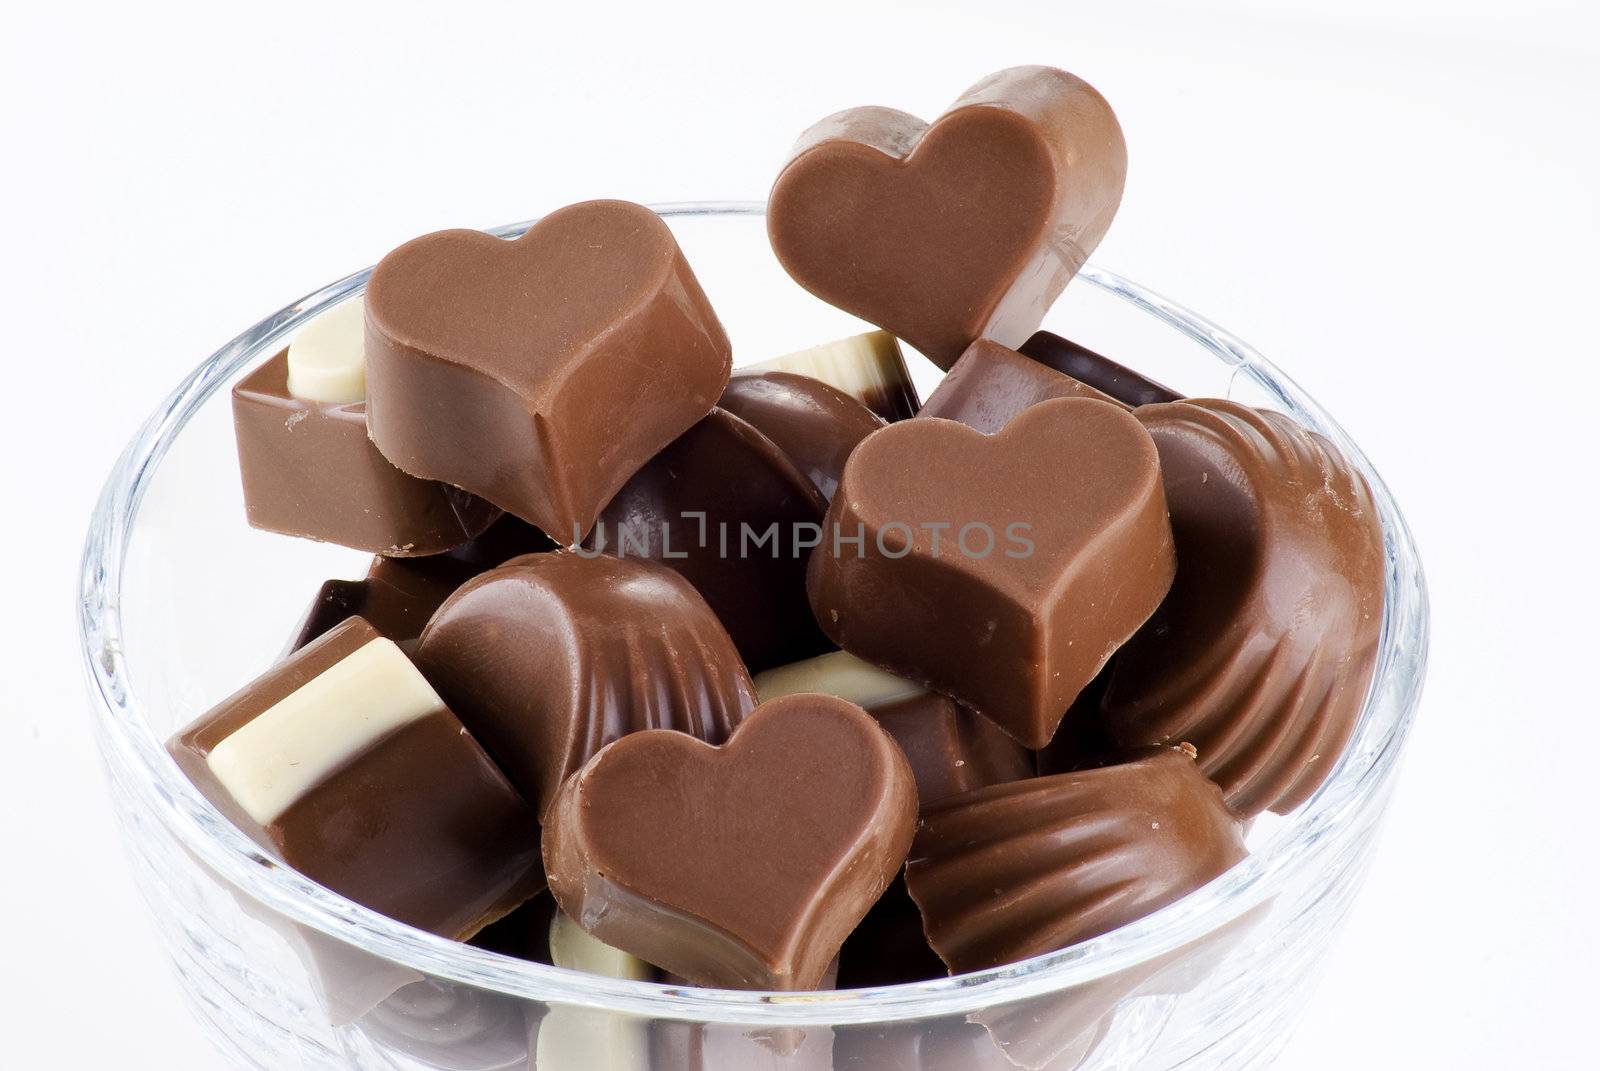 Glass bowl of assorted chocolates - close up